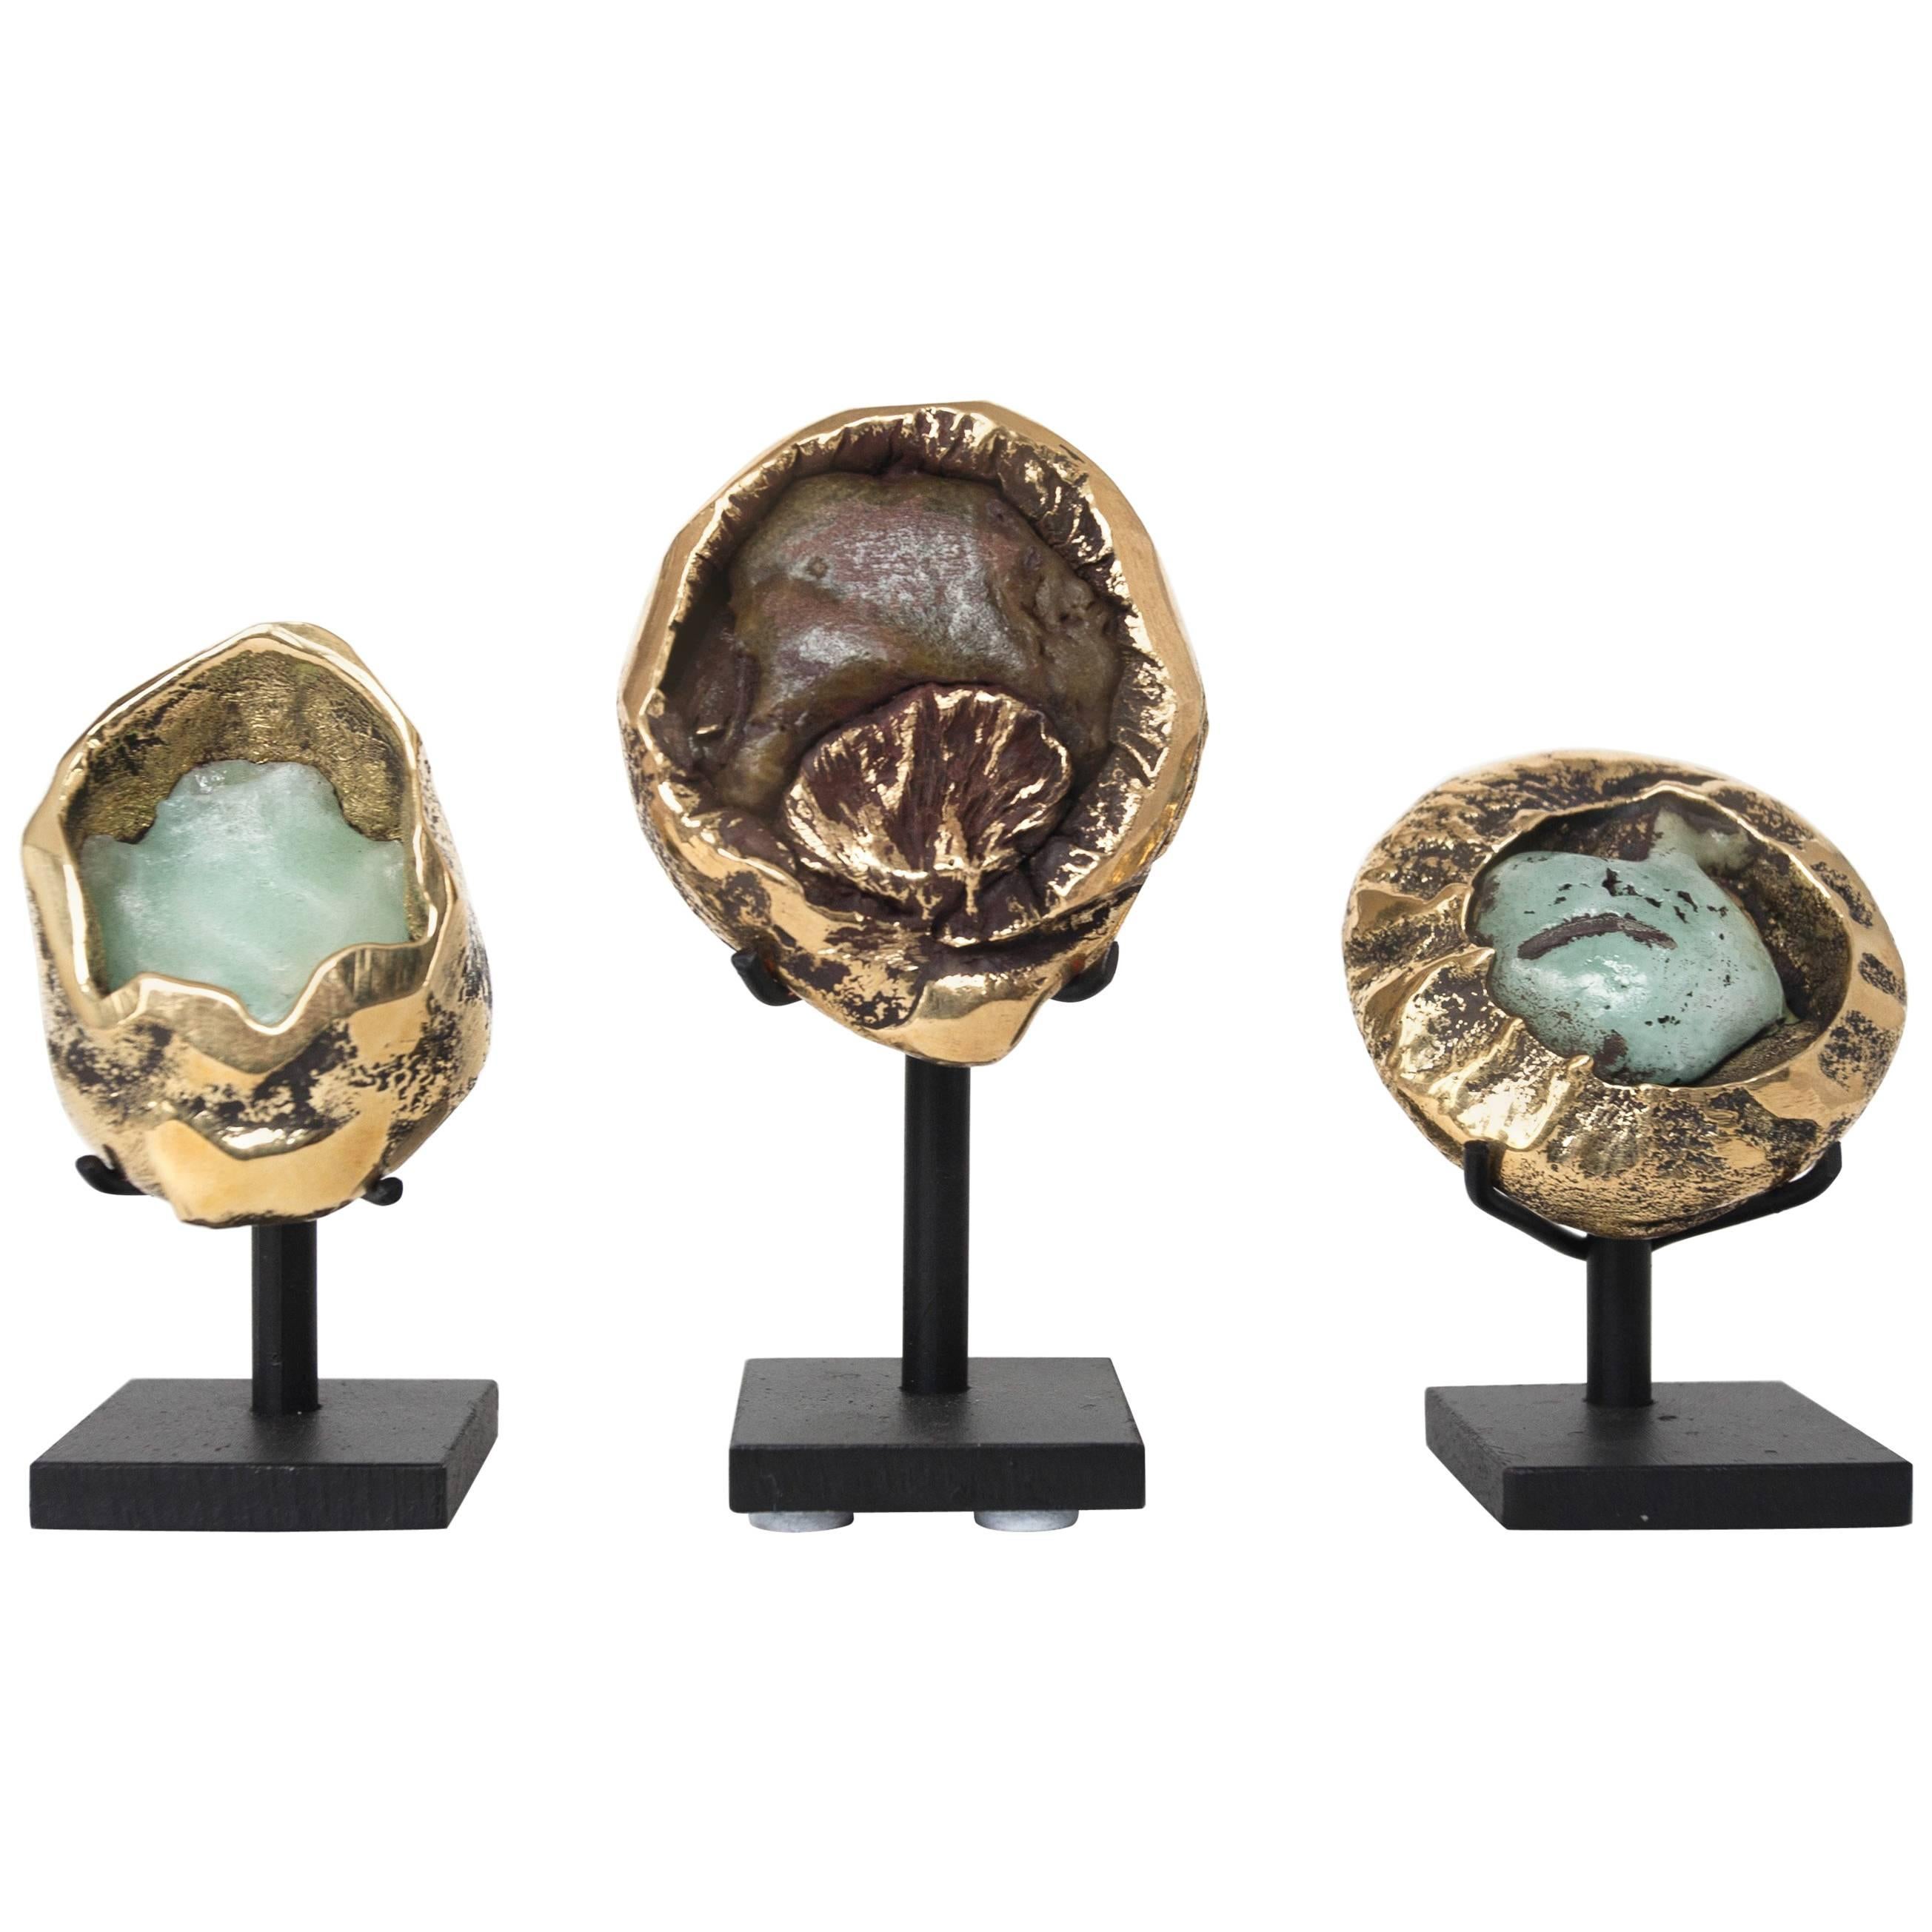 Handmade Brass and Glass Bespoke Decor Sculptural Objects from Circa3230